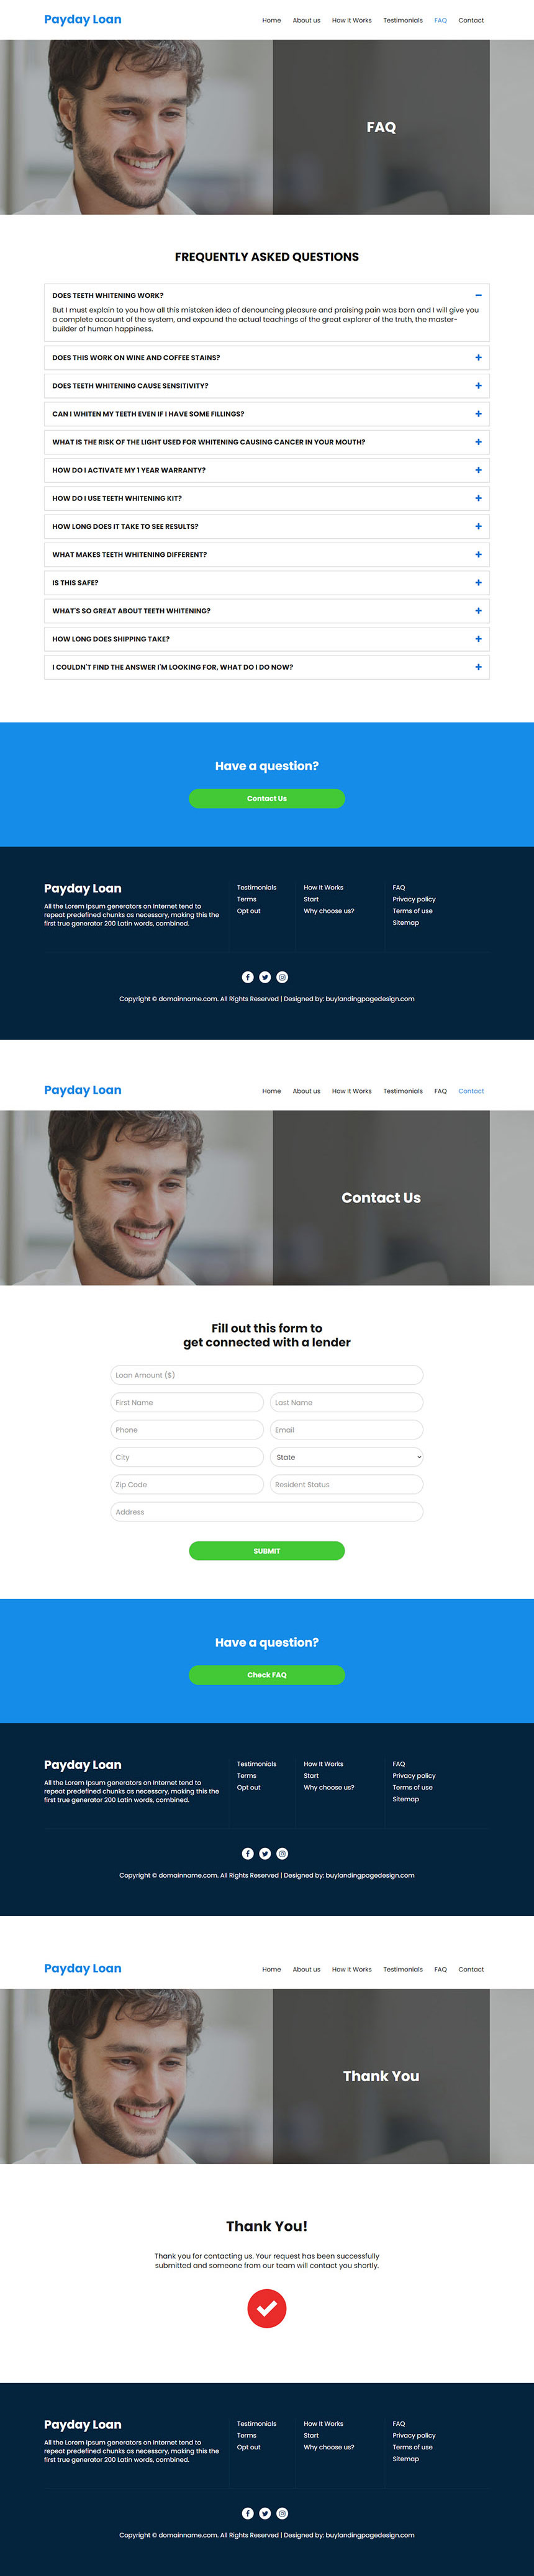 payday cash loan responsive website design